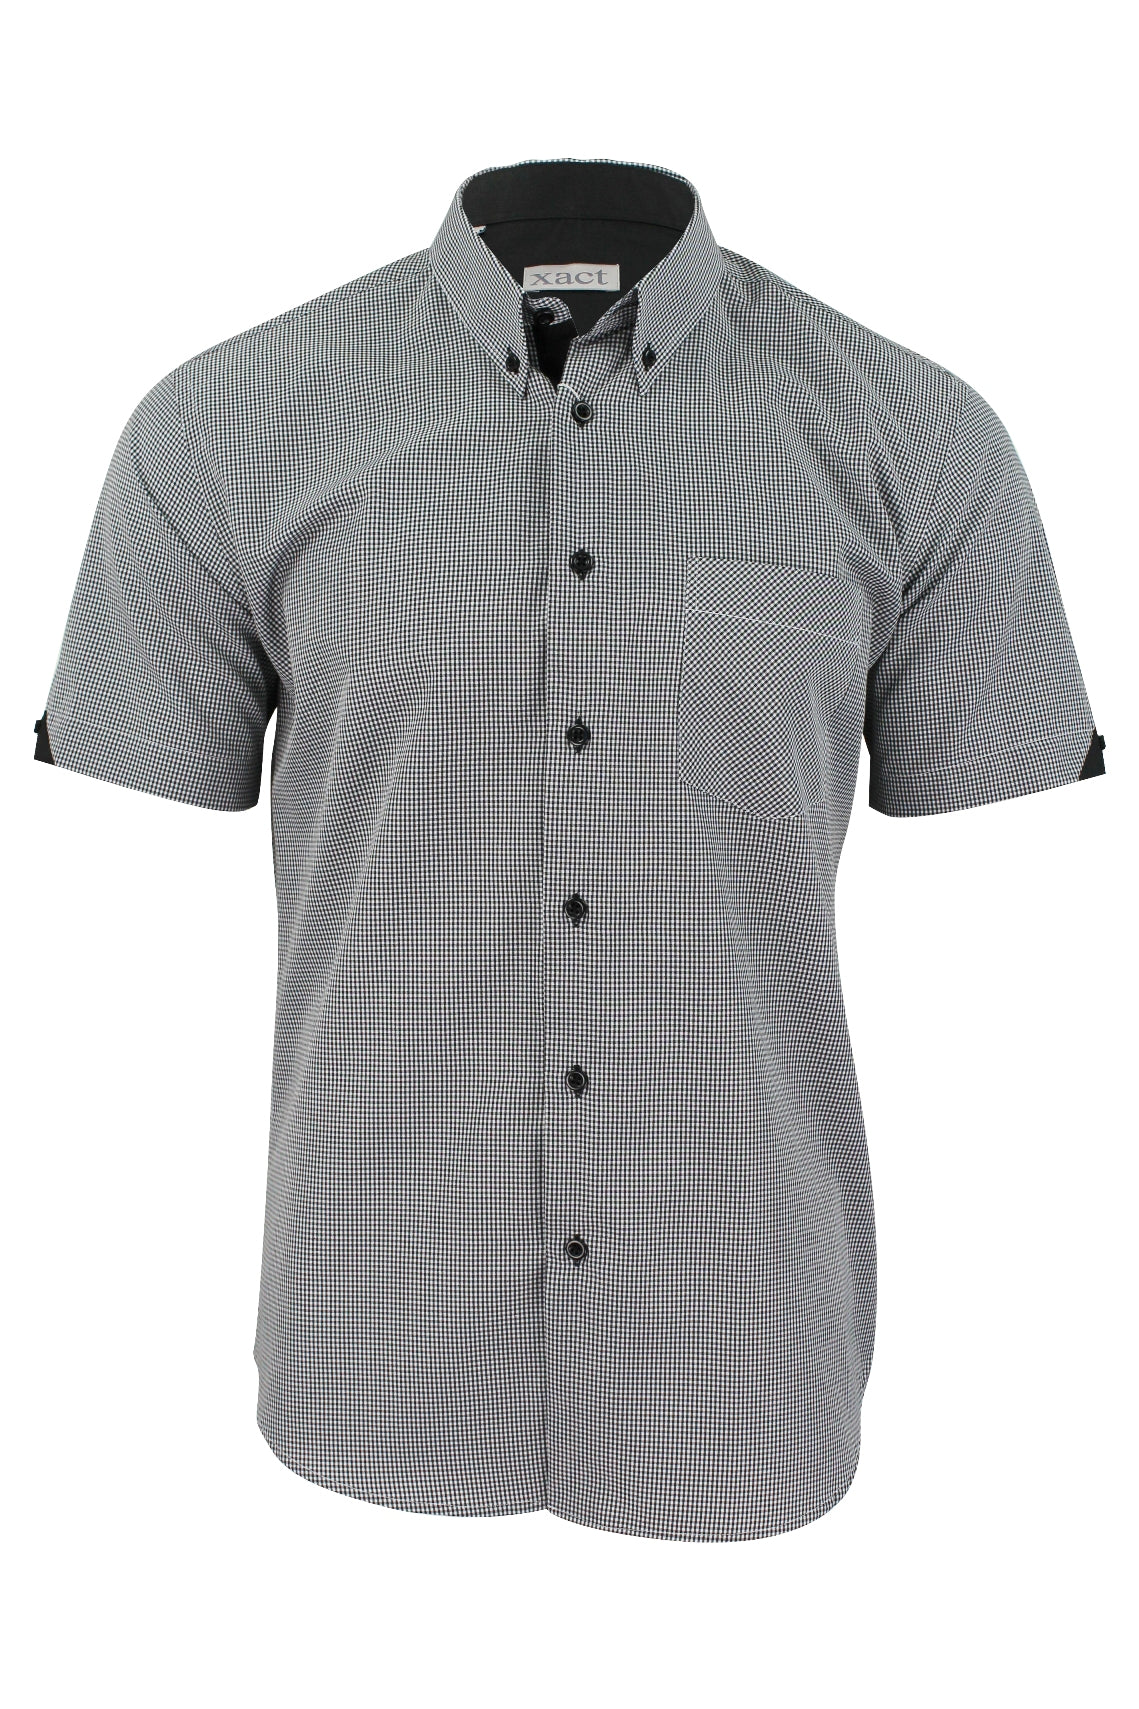 Mens Short Sleeved Shirt by Xact Clothing Micro Gingham Check, 01, 1510114, Black